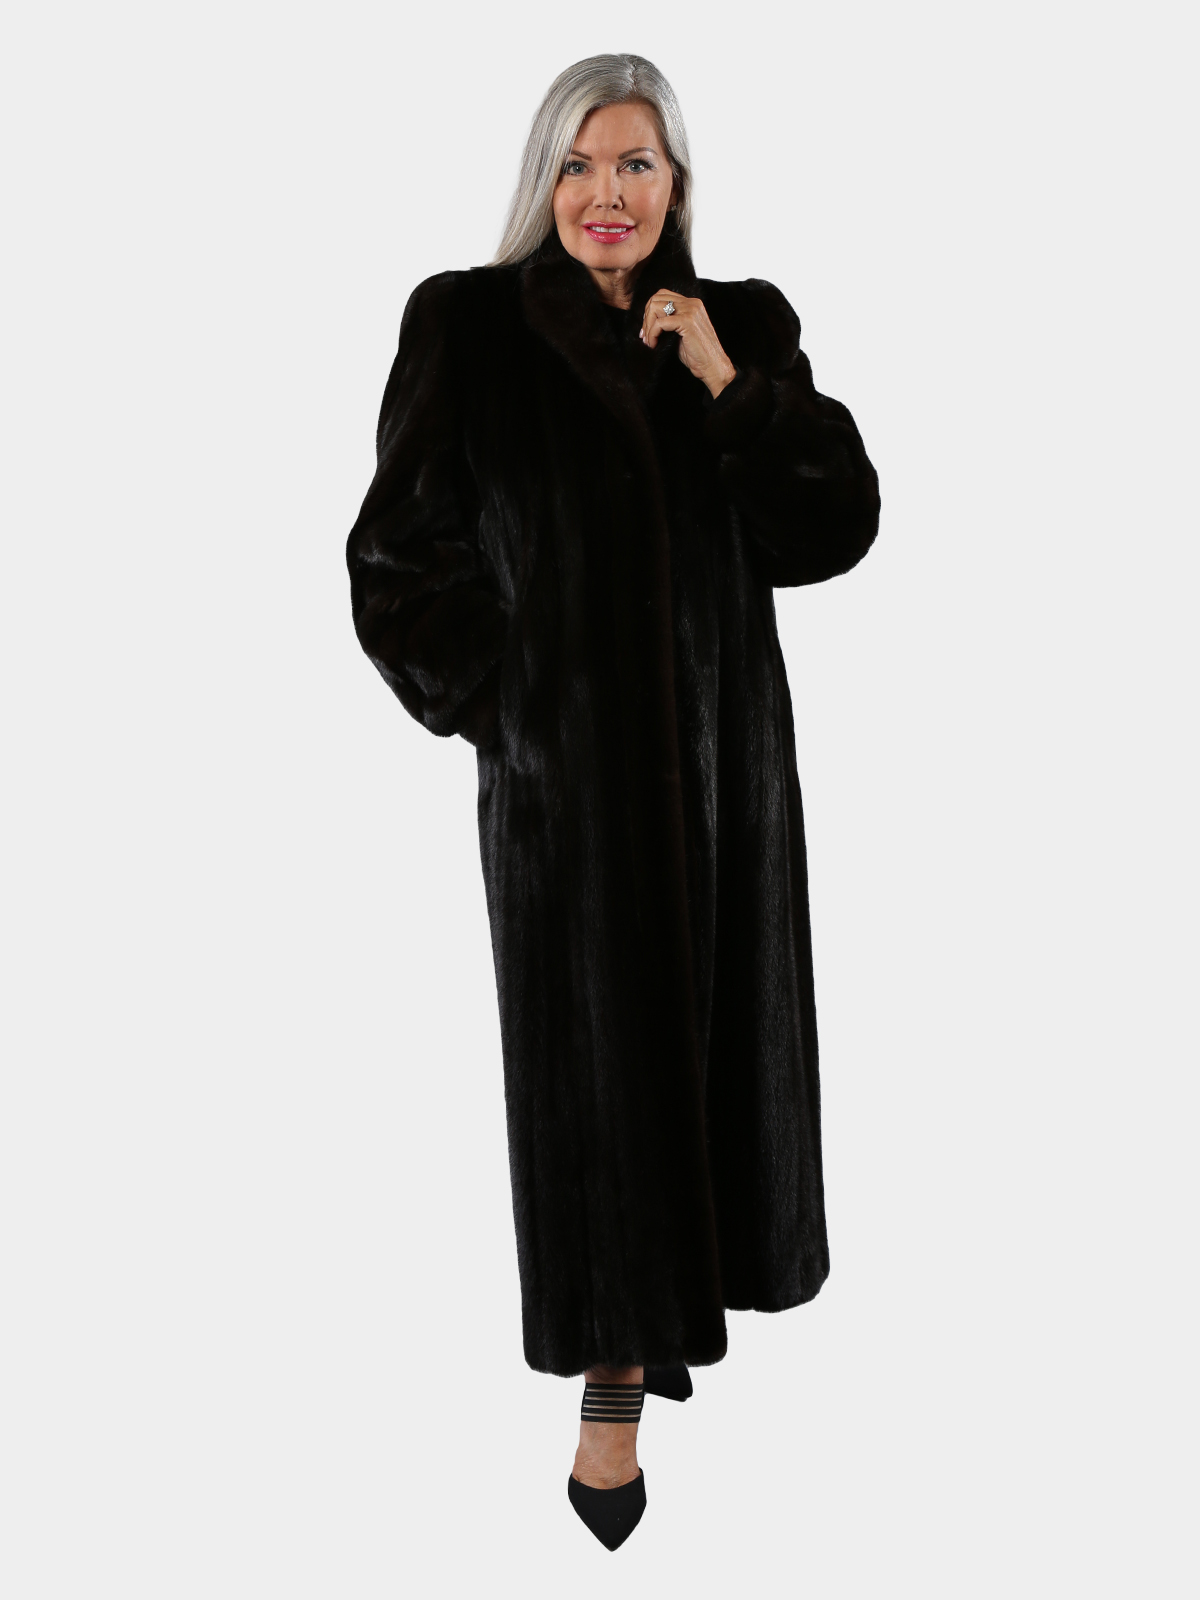 Doll's Full Skin Ranch Mink Fur Coat - furoutlet - fur coat, fur